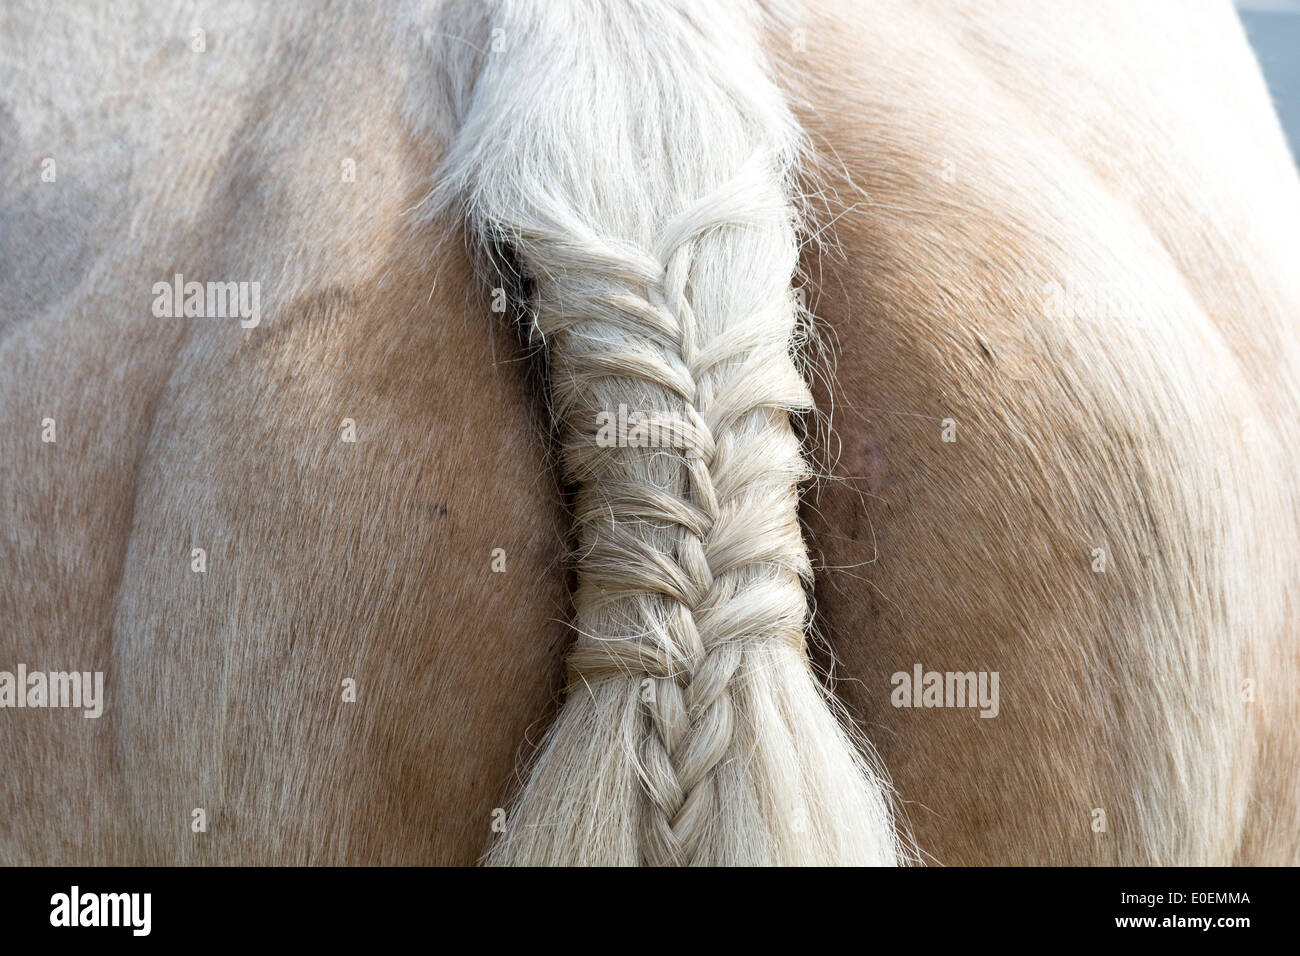 Braided_tail_of_a_Palomino_horse-E0EMMA.